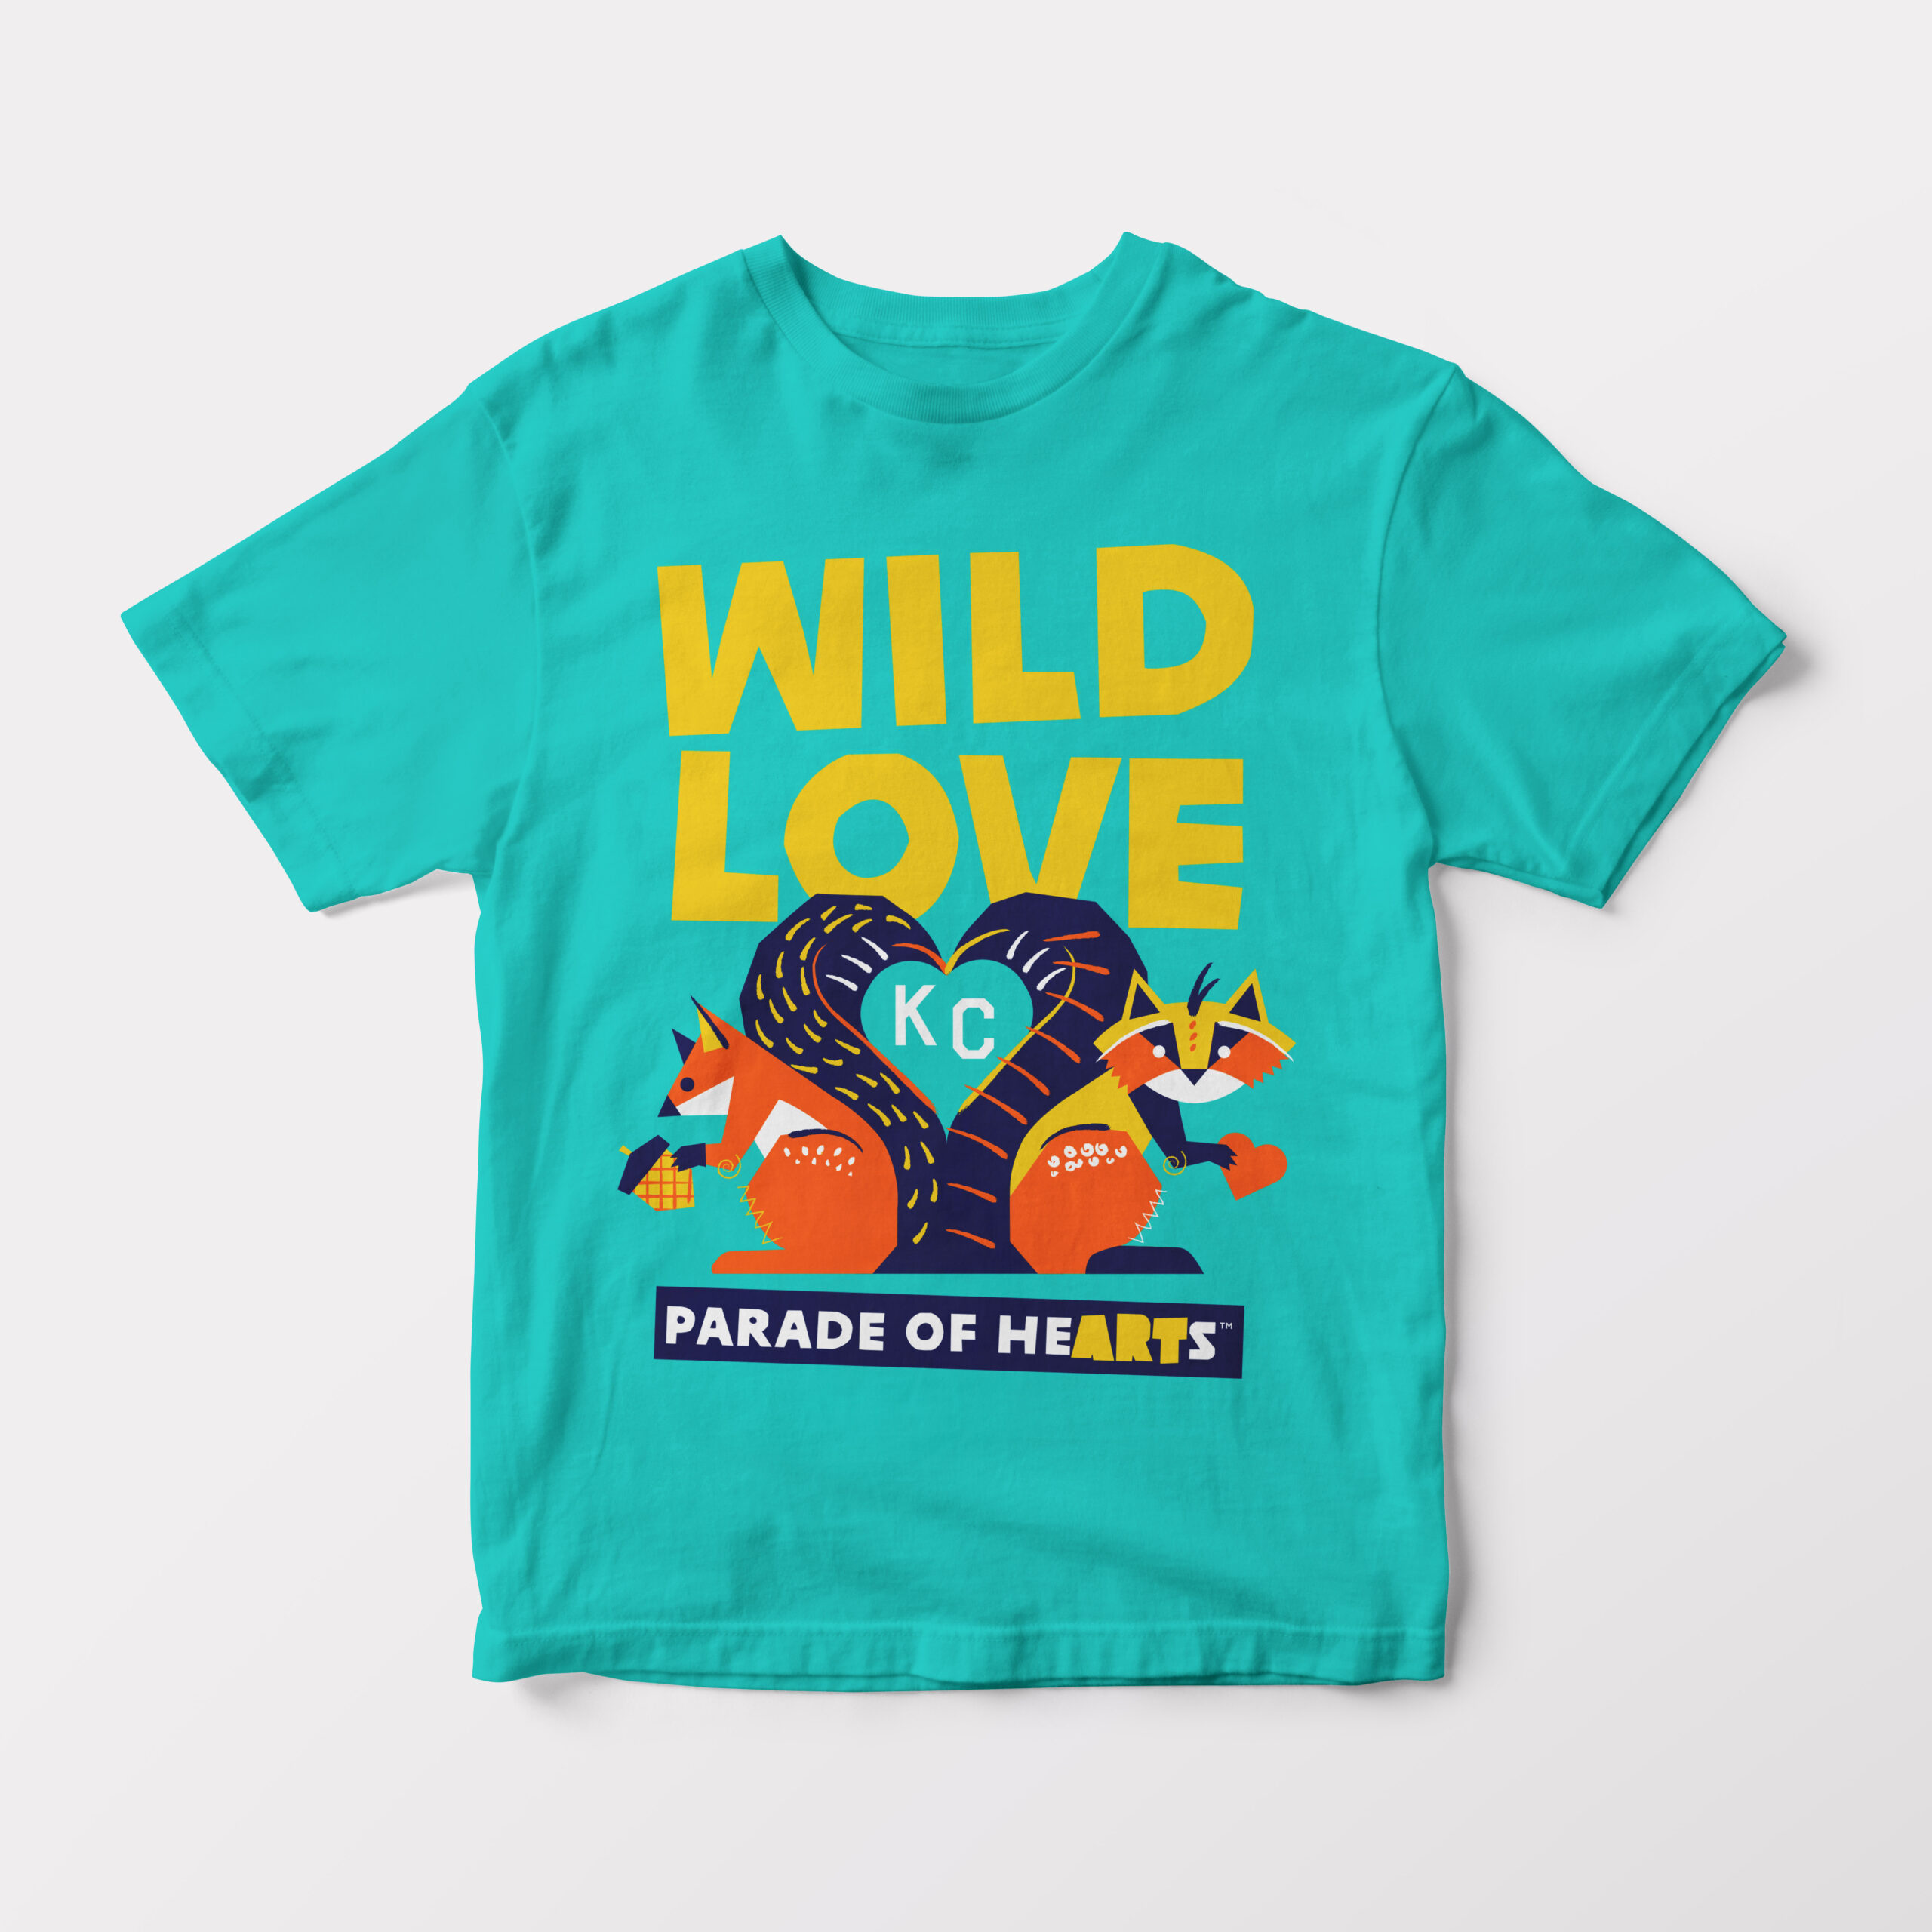 WILD LOVE Youth T-Shirt